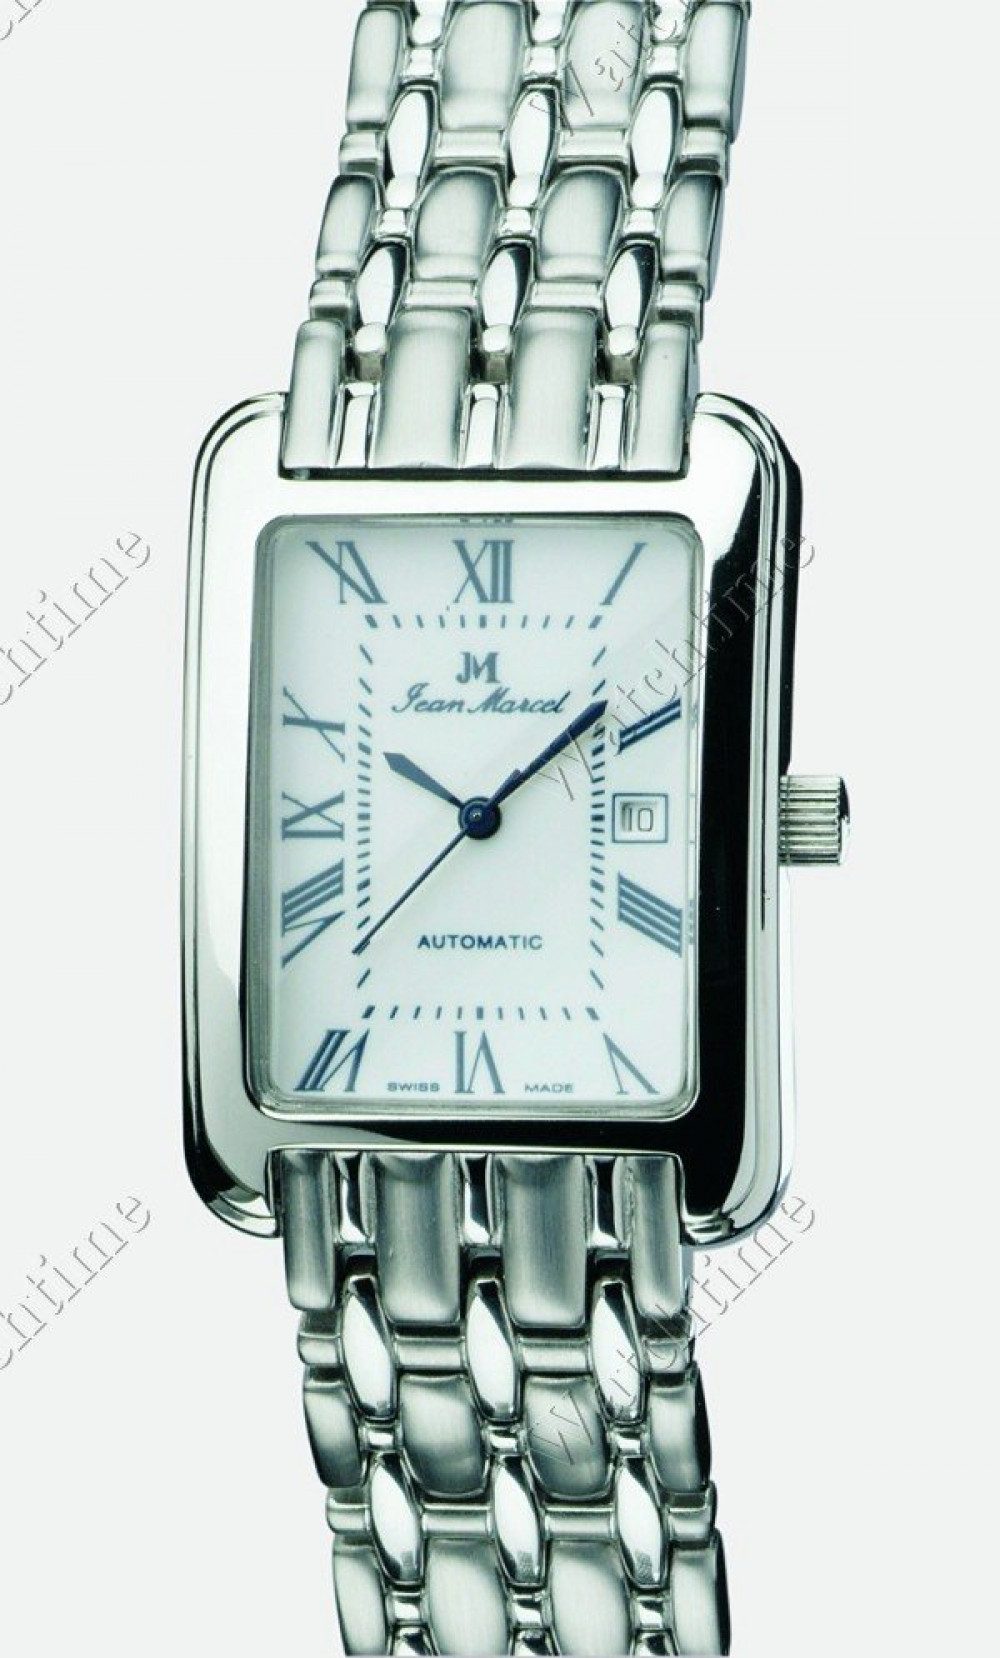 Zegarek firmy Jean Marcel, model Herrenuhr Edelstahlband